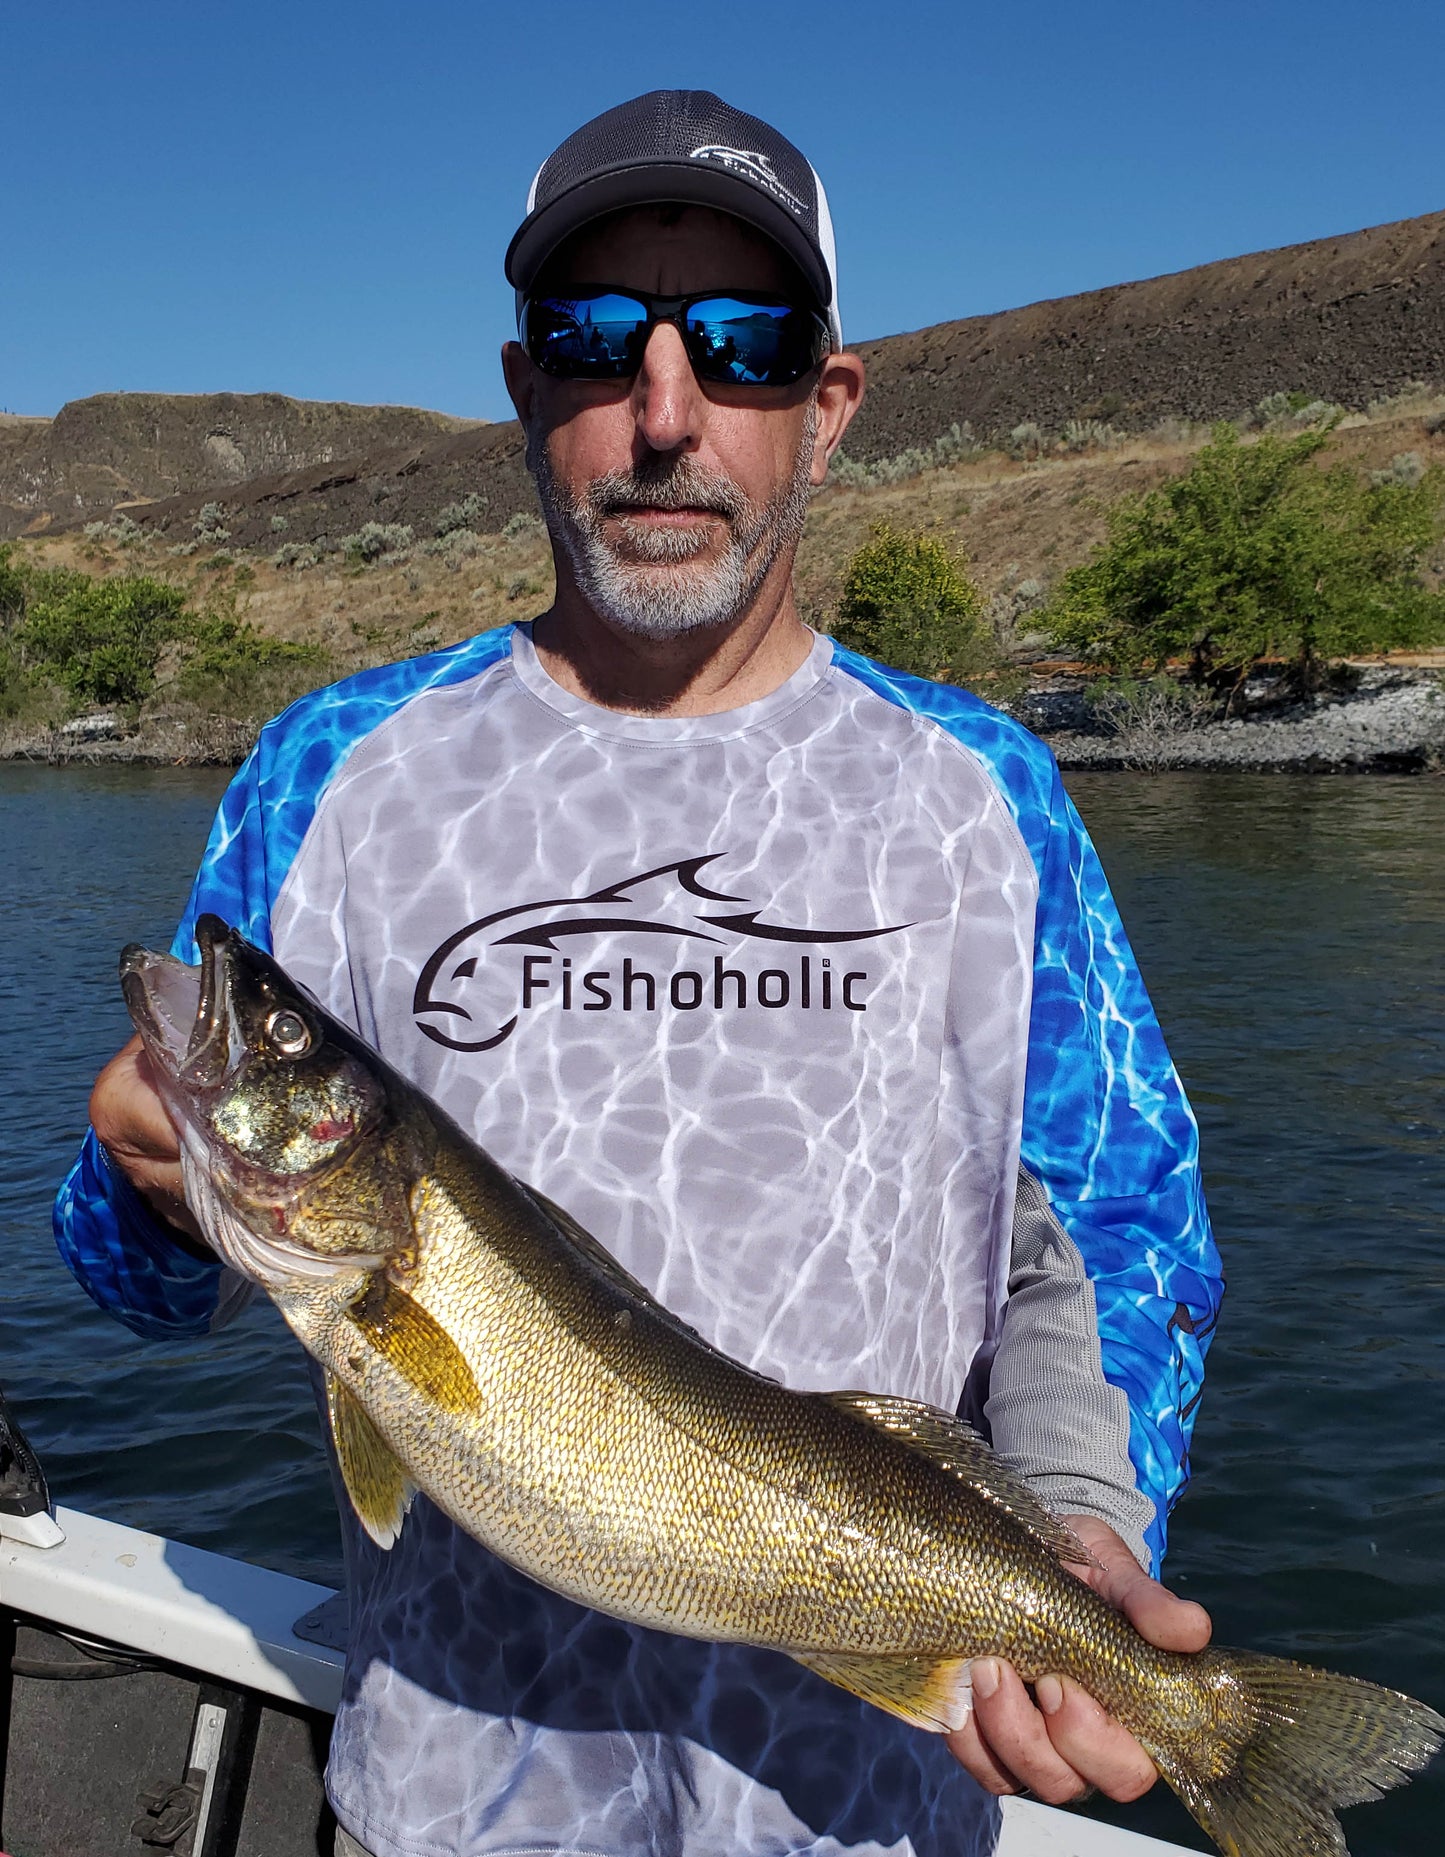  Fishoholic Pro Series Polarized Fishing Sunglasses w' Rubber  Accents - UV400 Sun Protection - Fishing Gift (proFX_BLKstk-BLU-blk) :  Sports & Outdoors